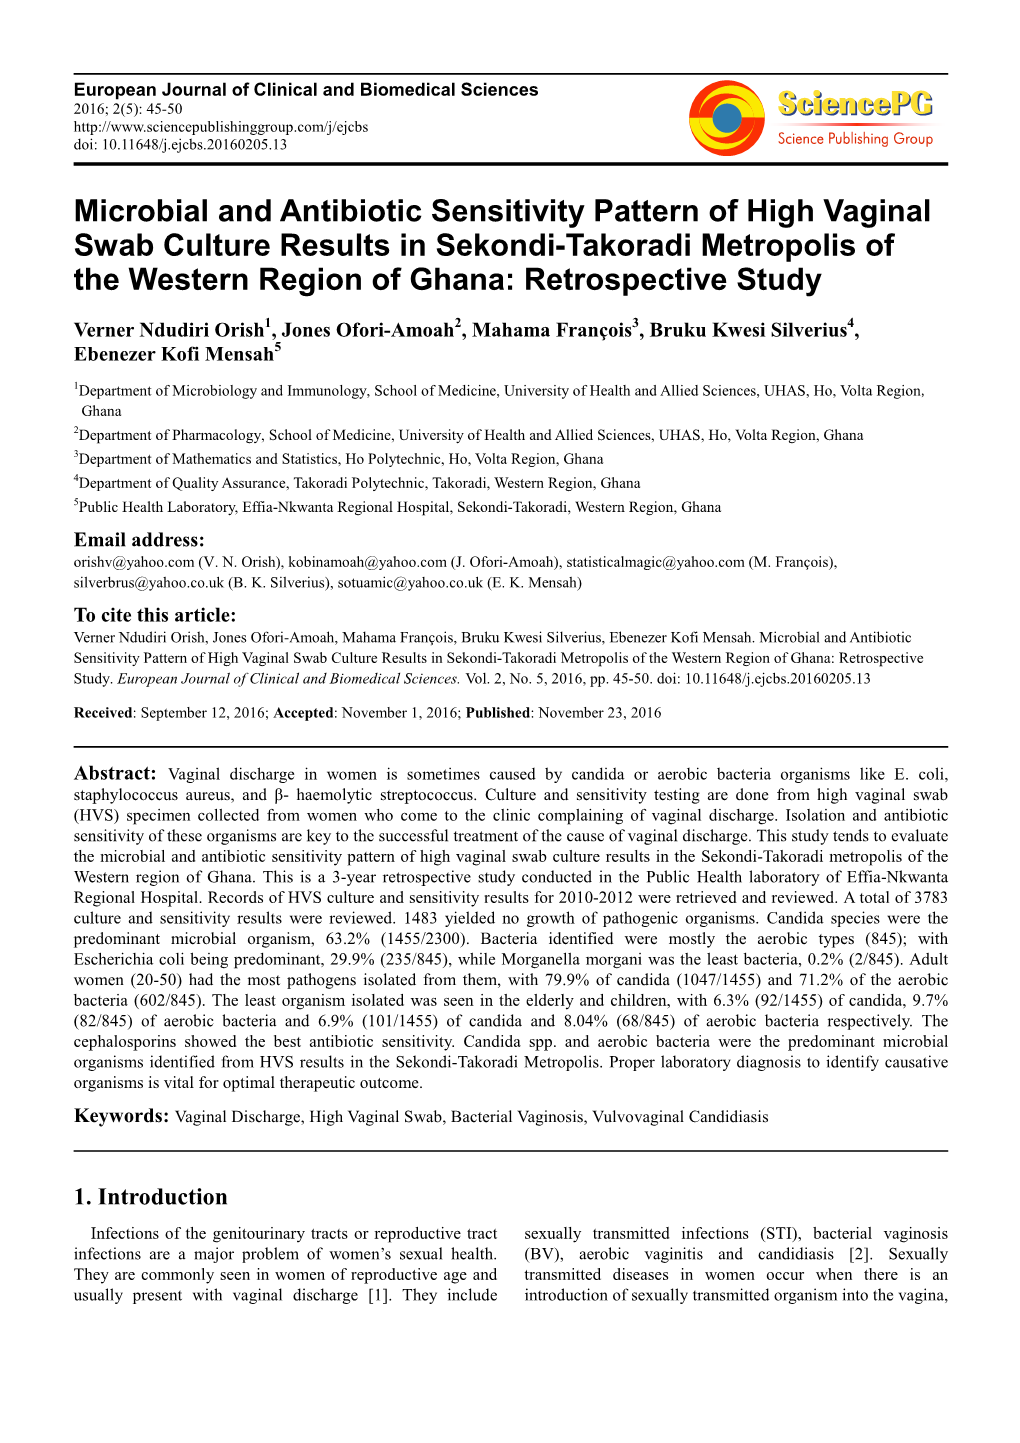 Microbial and Antibiotic Sensitivity Pattern of High Vaginal Swab Culture Results in Sekondi-Takoradi Metropolis of the Western Region of Ghana: Retrospective Study